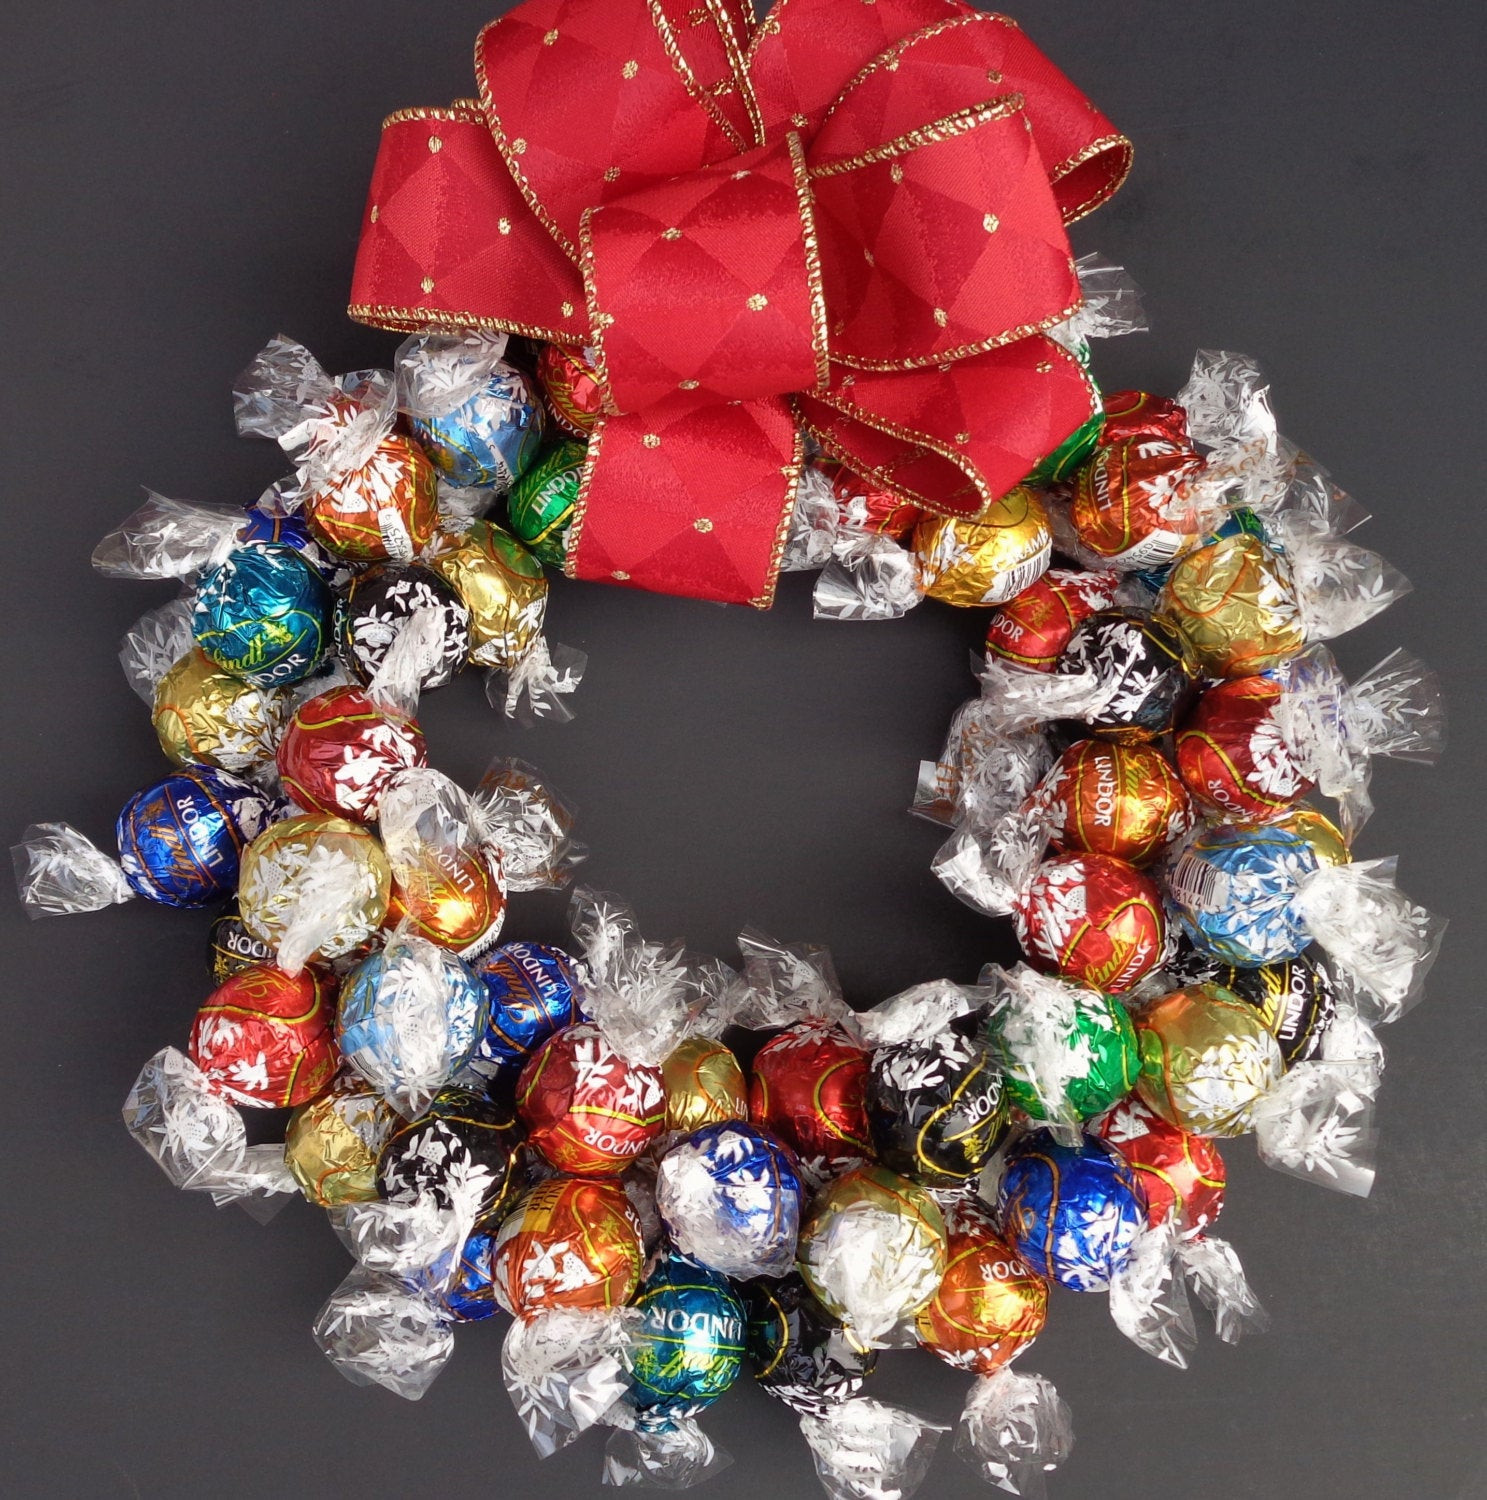 Christmas Wreath Candy
 Chocolate Truffle Candy Wreath Holiday by CandyWreathsbyCarla